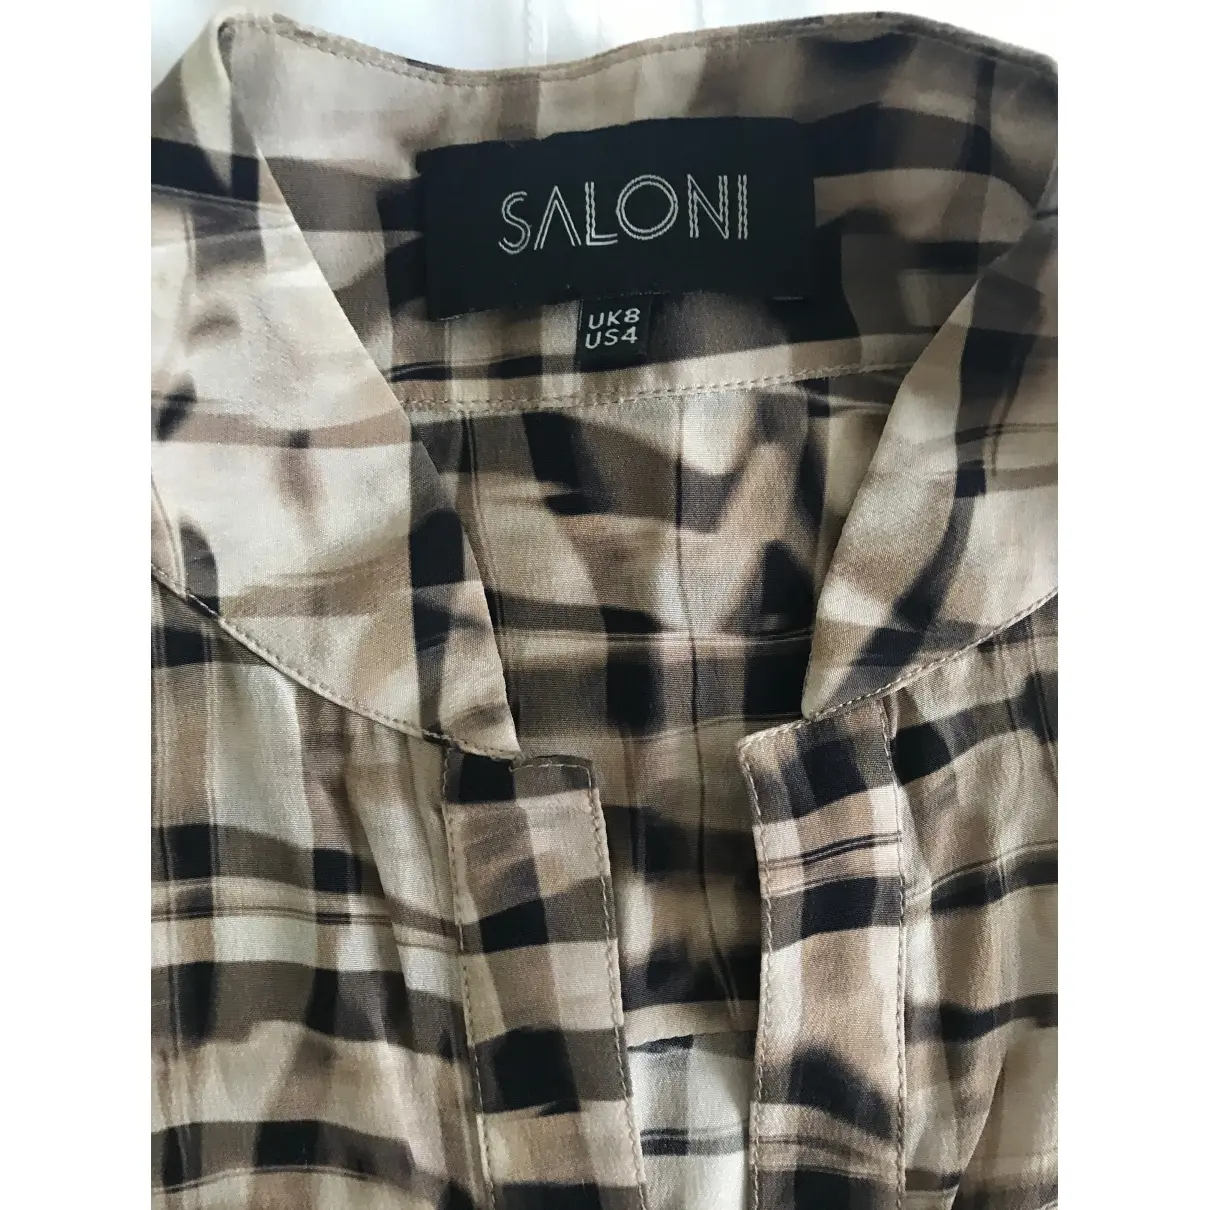 Buy Saloni Silk shirt online